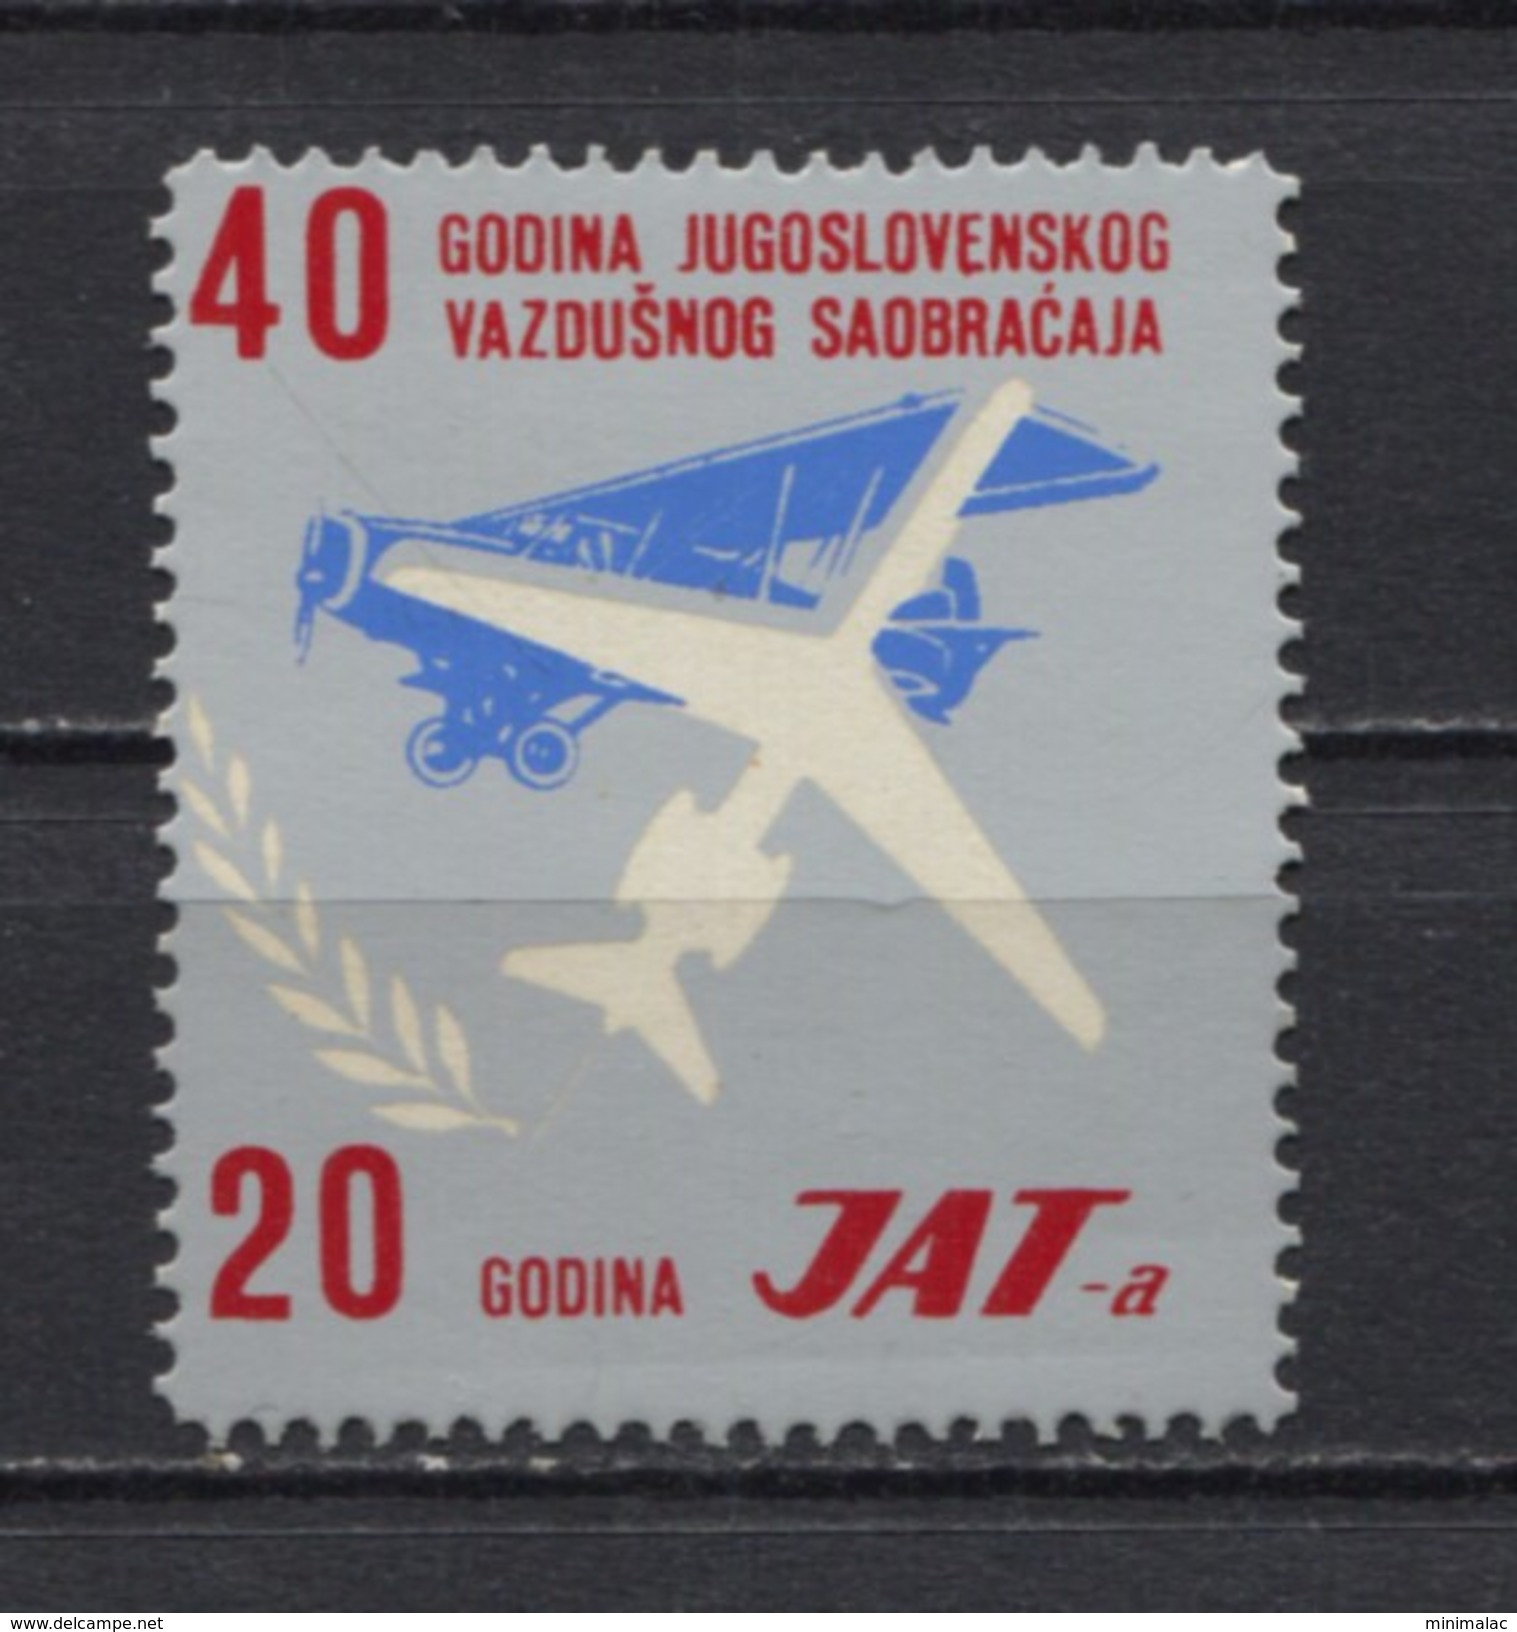 Yugoslavia 1967, 40th Anniversary Of Yugoslav Air Traffic, Yugoslav Airlines, JAT, Plane, Cinderella, Additional,  MNH - Poste Aérienne